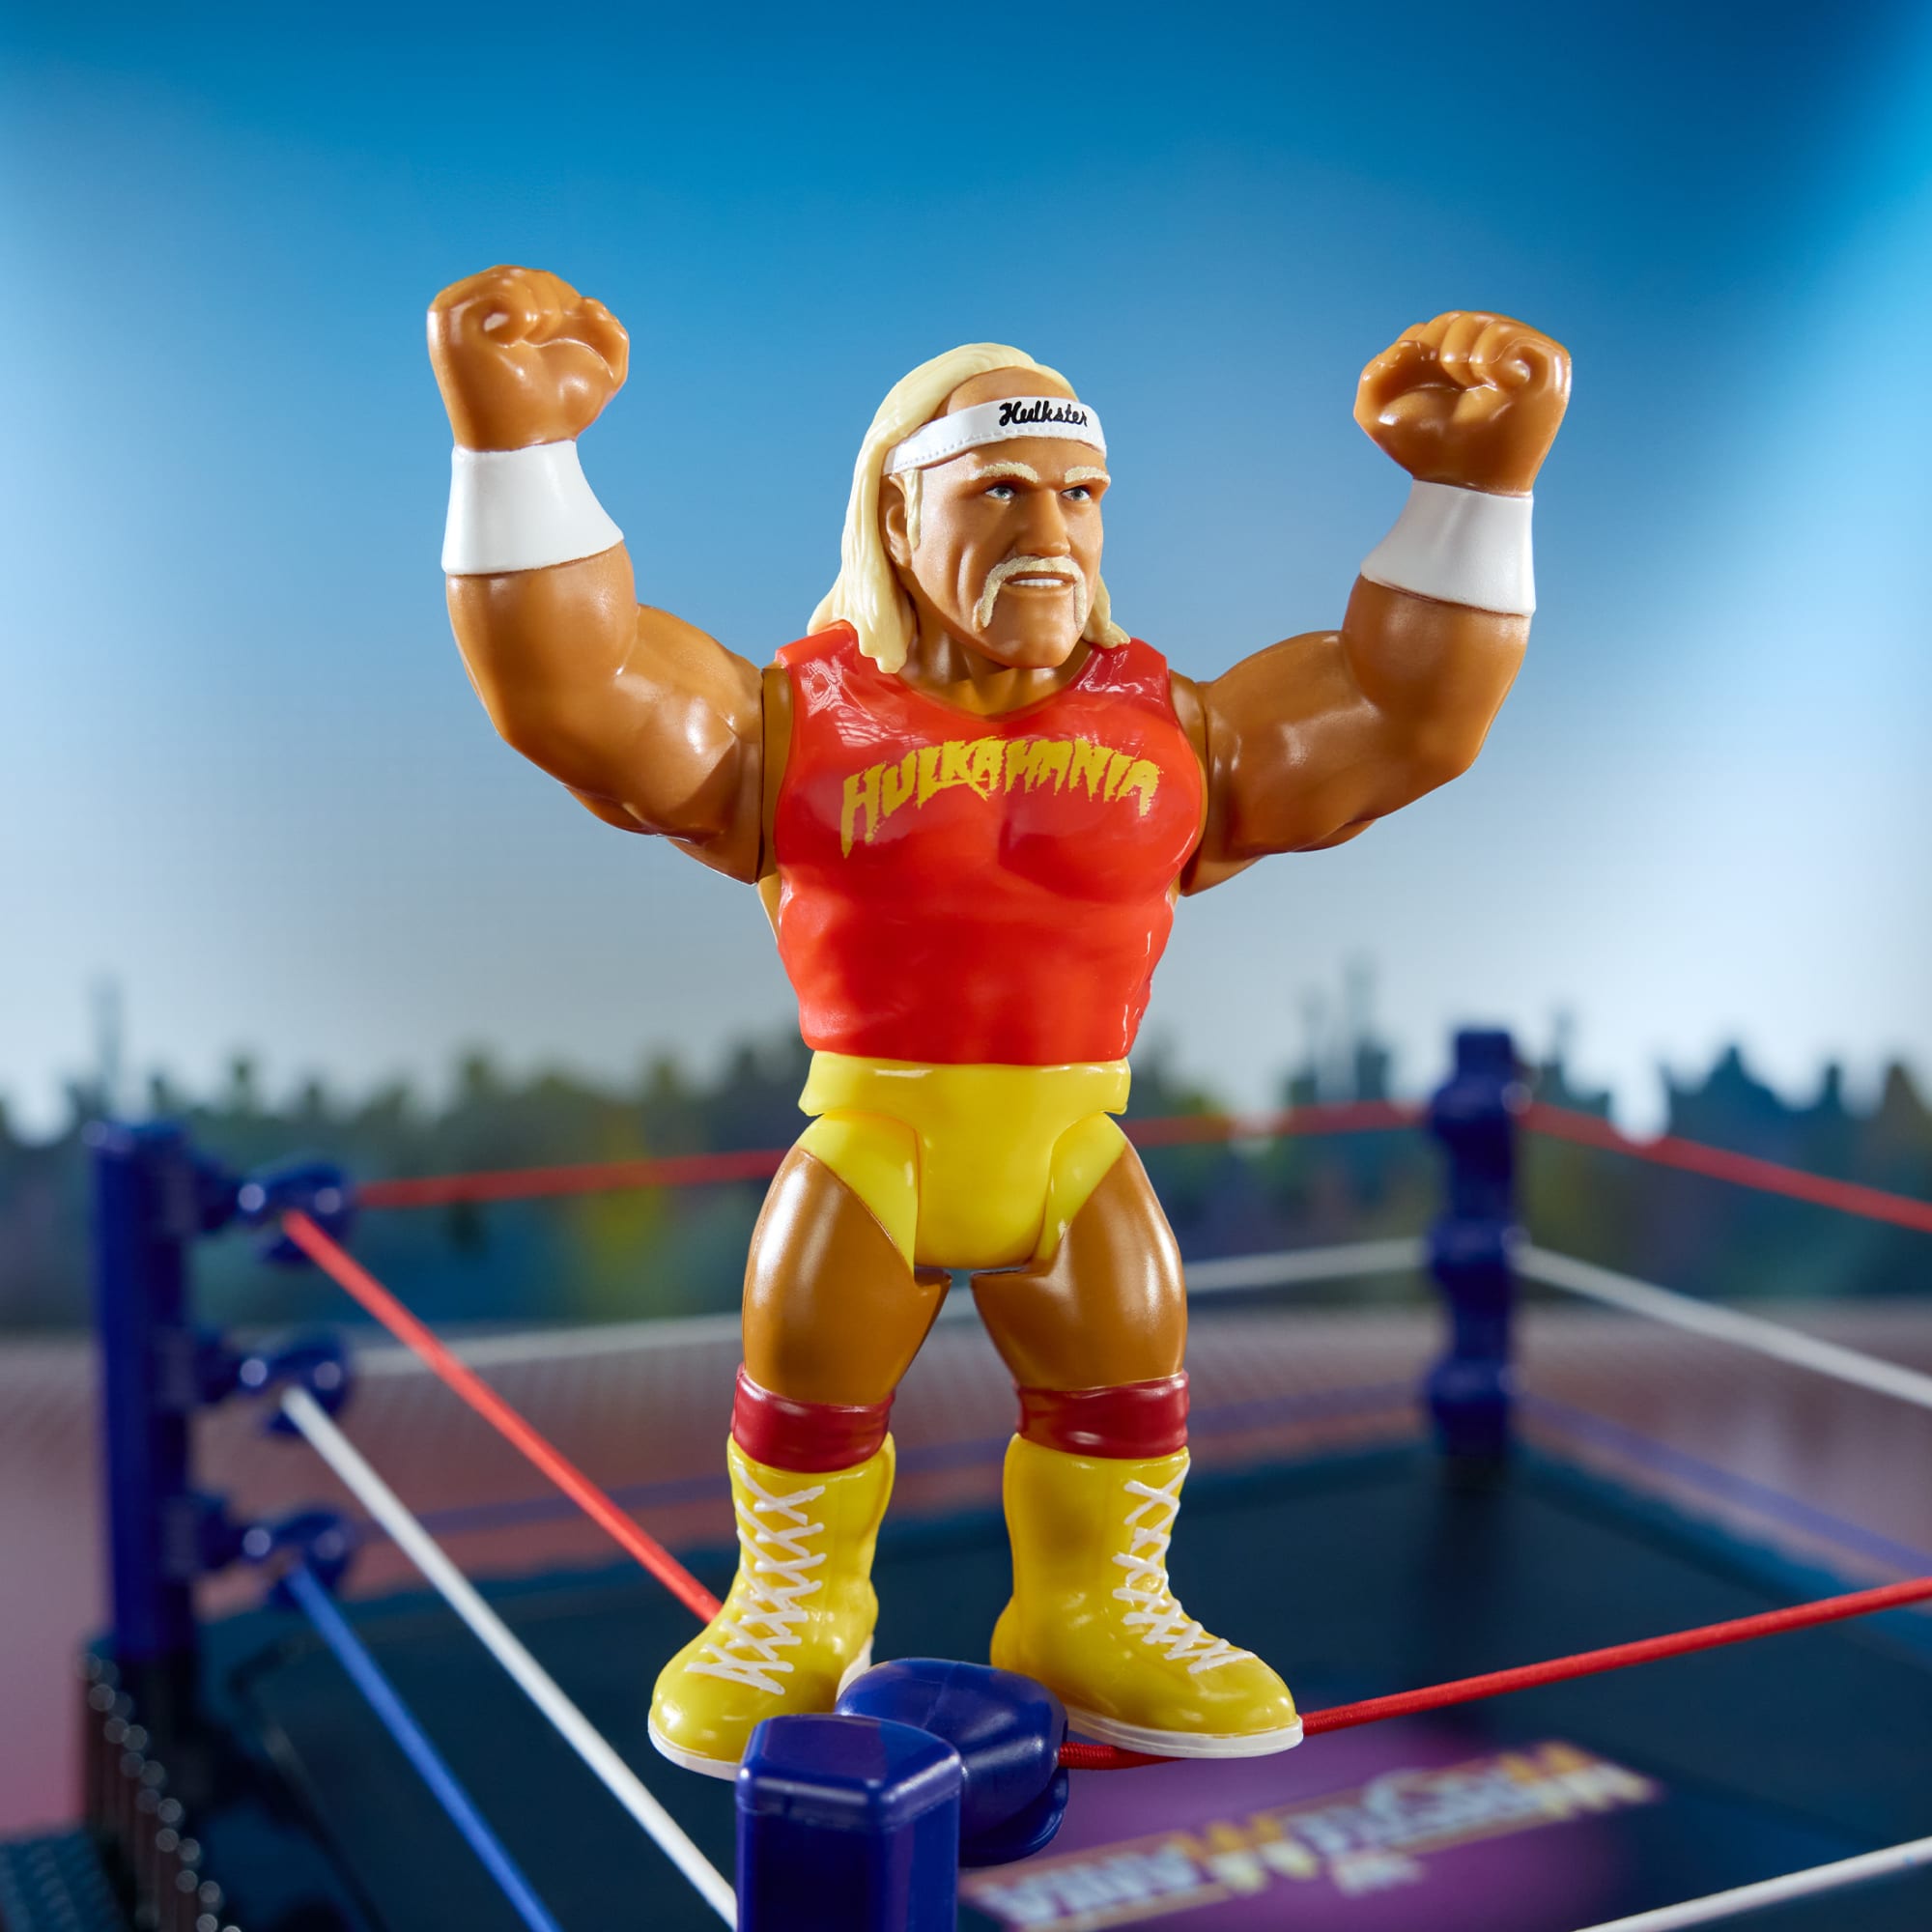 WWE Basic Wrestling figures brand new/sealed Mattel toys